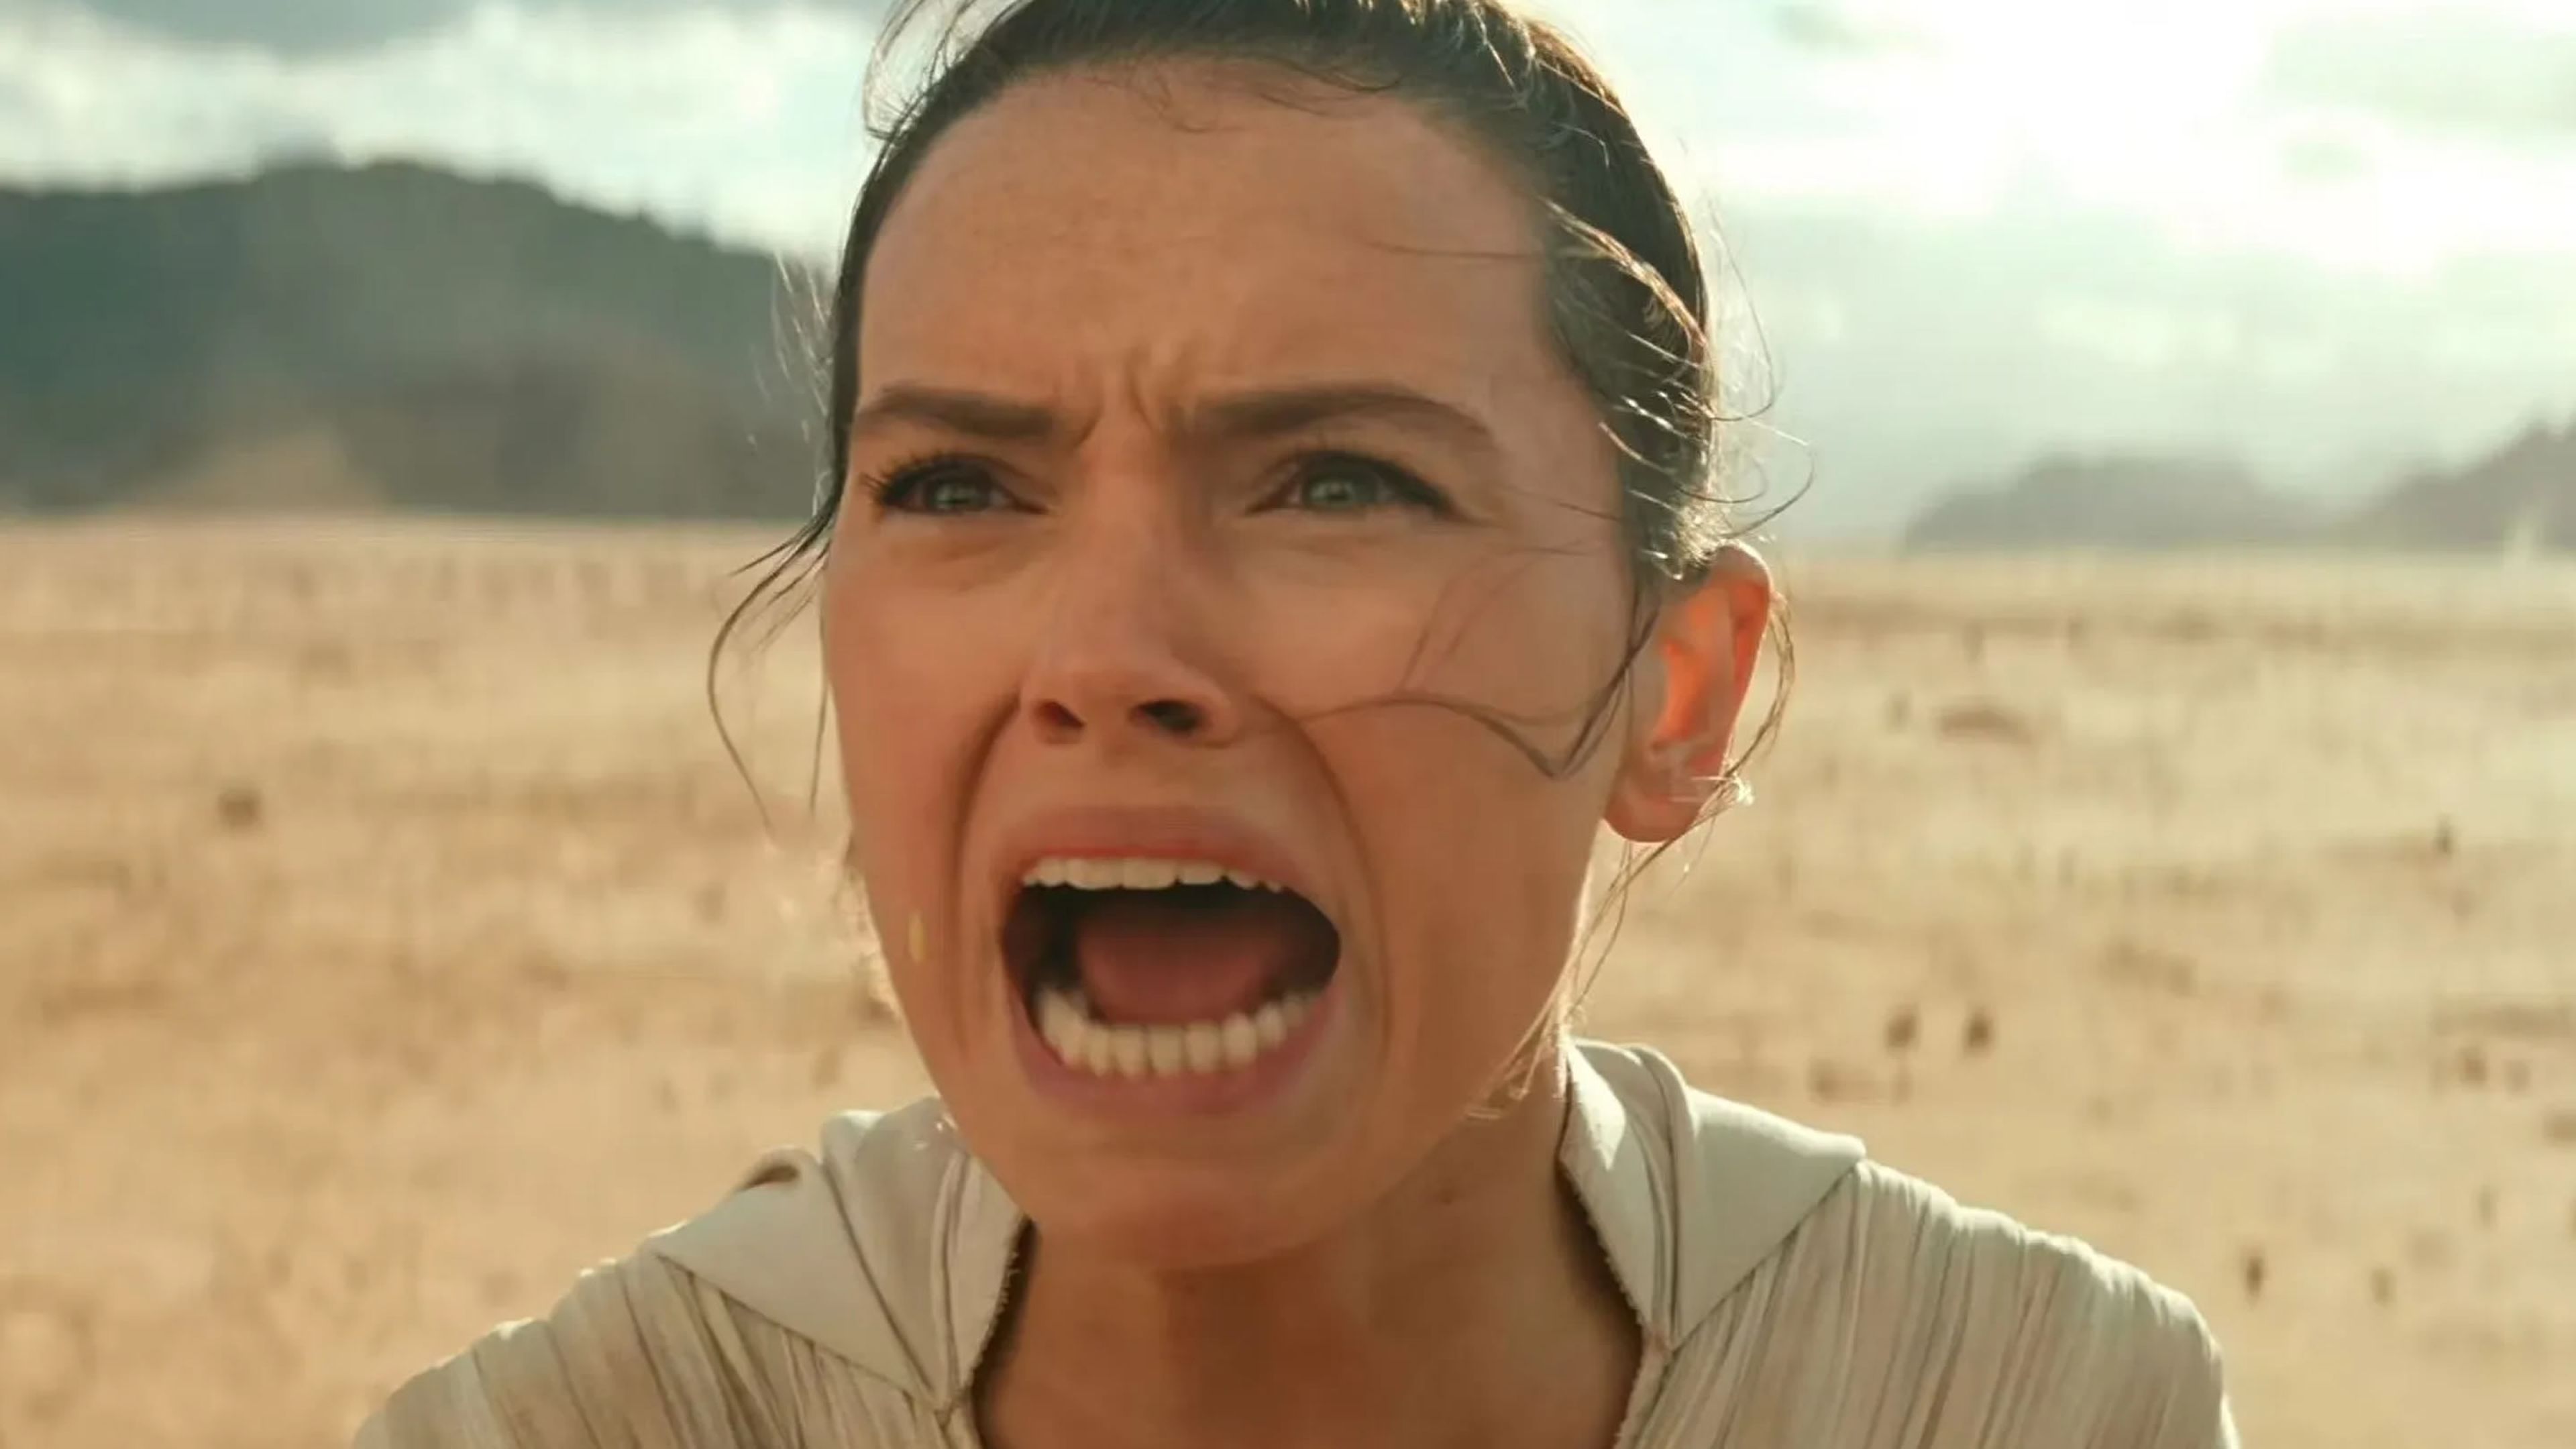 Star Wars: Episodio IX - El ascenso de Skywalker (2019) - Rey (Daisy Ridley)